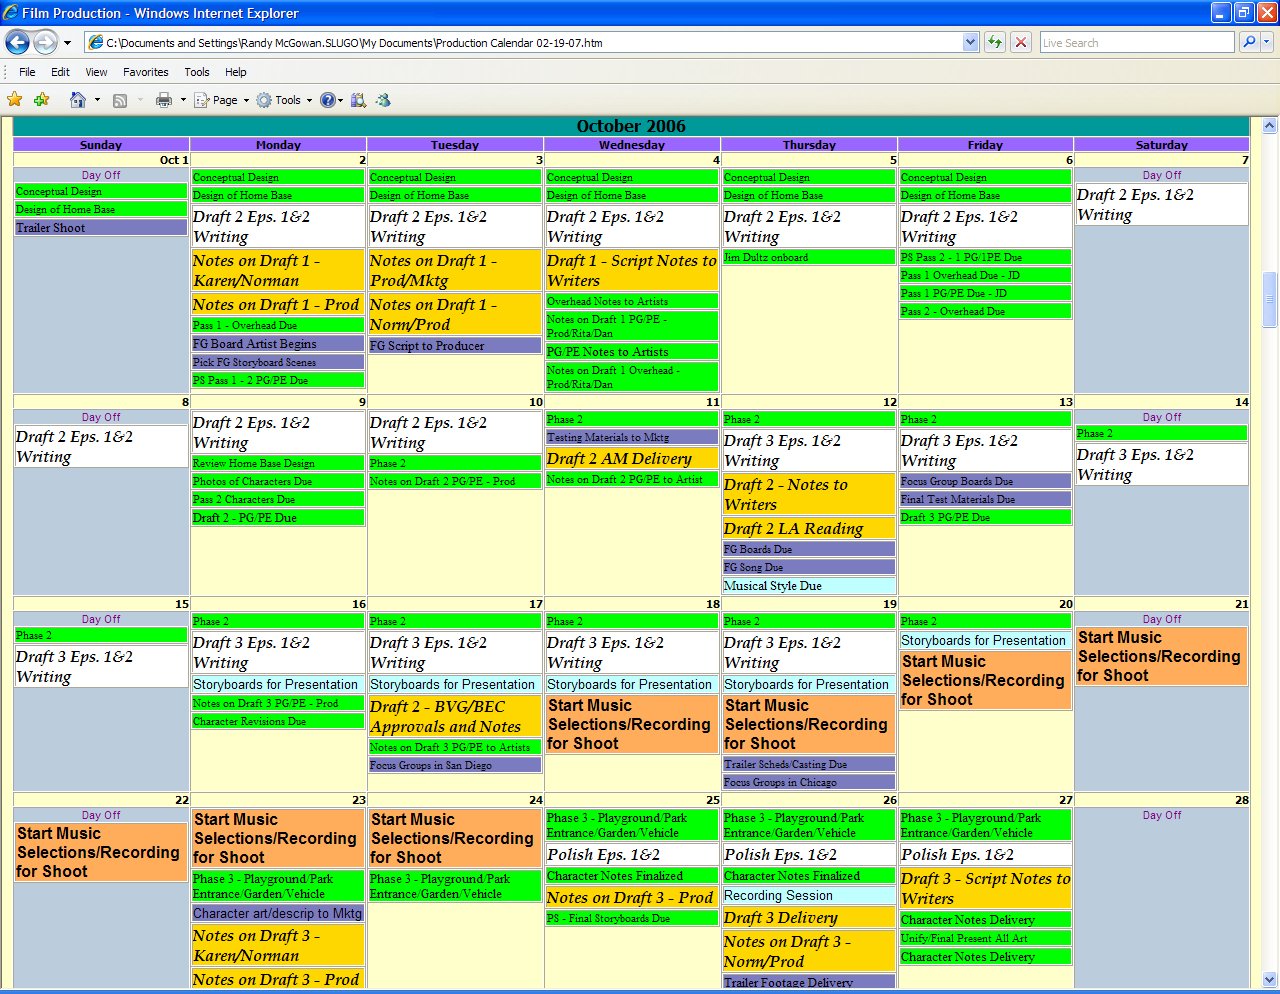 Software Release Calendar Template Excel